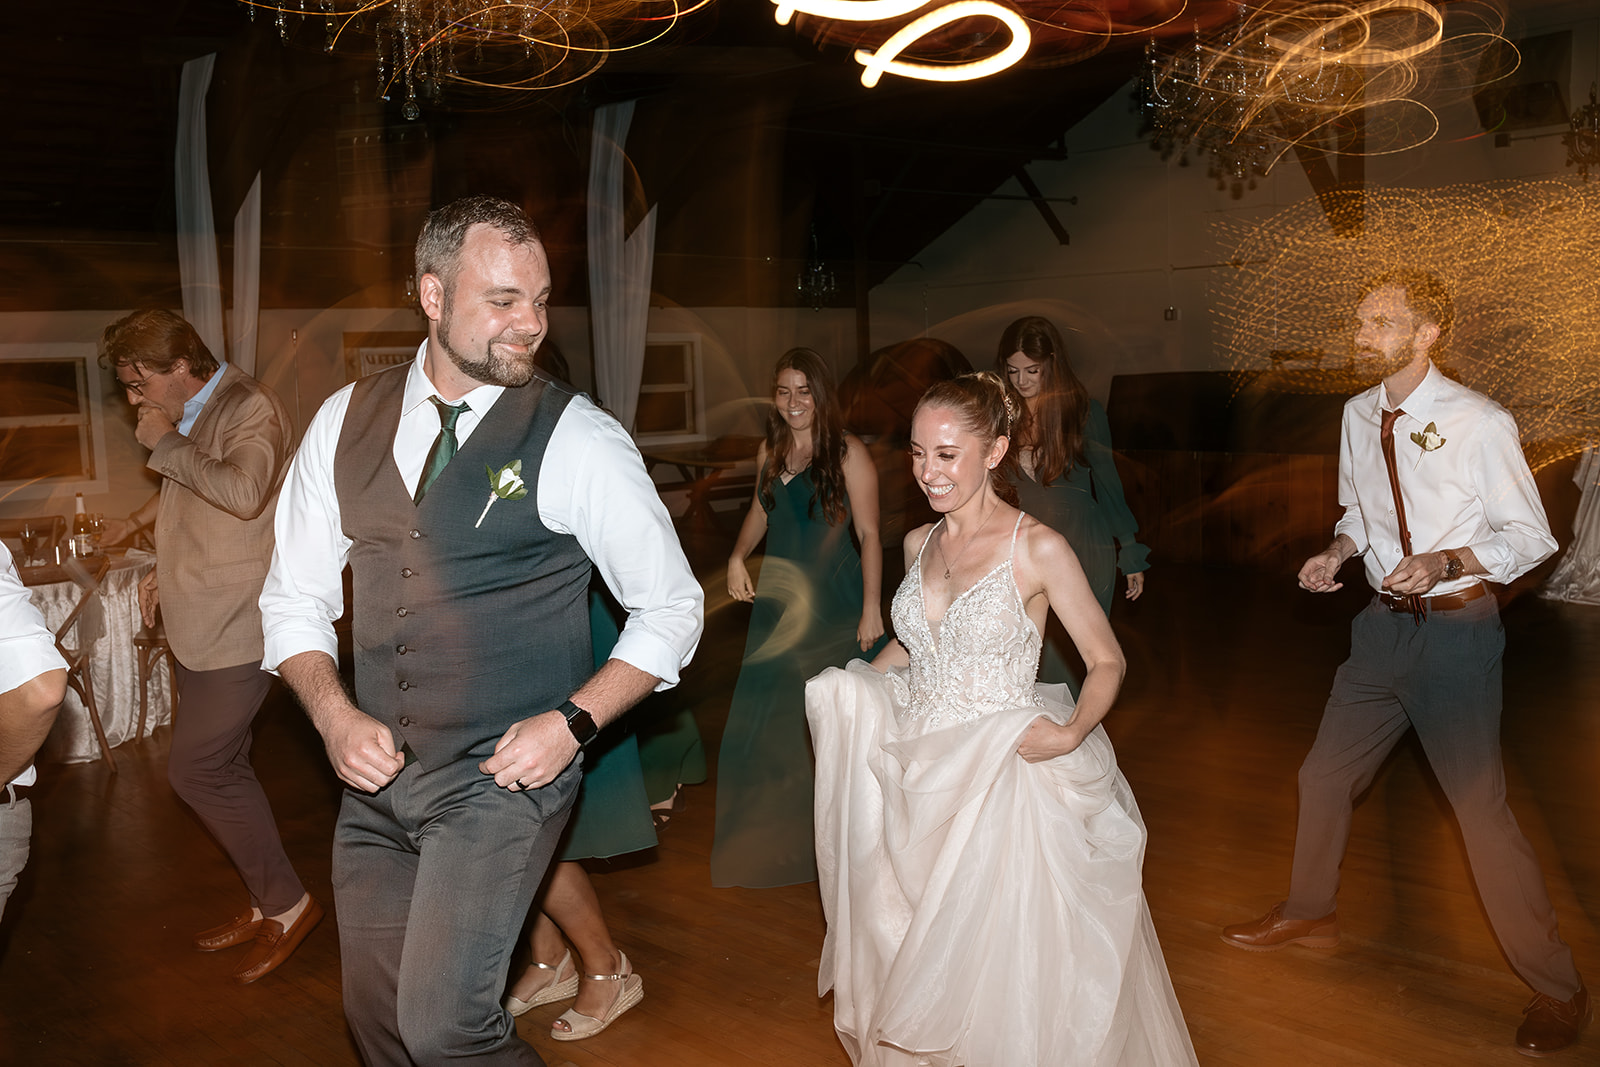 copper gables barn wedding roy washington state wedding dj wedding lights wedding party pictures dancing song ideas